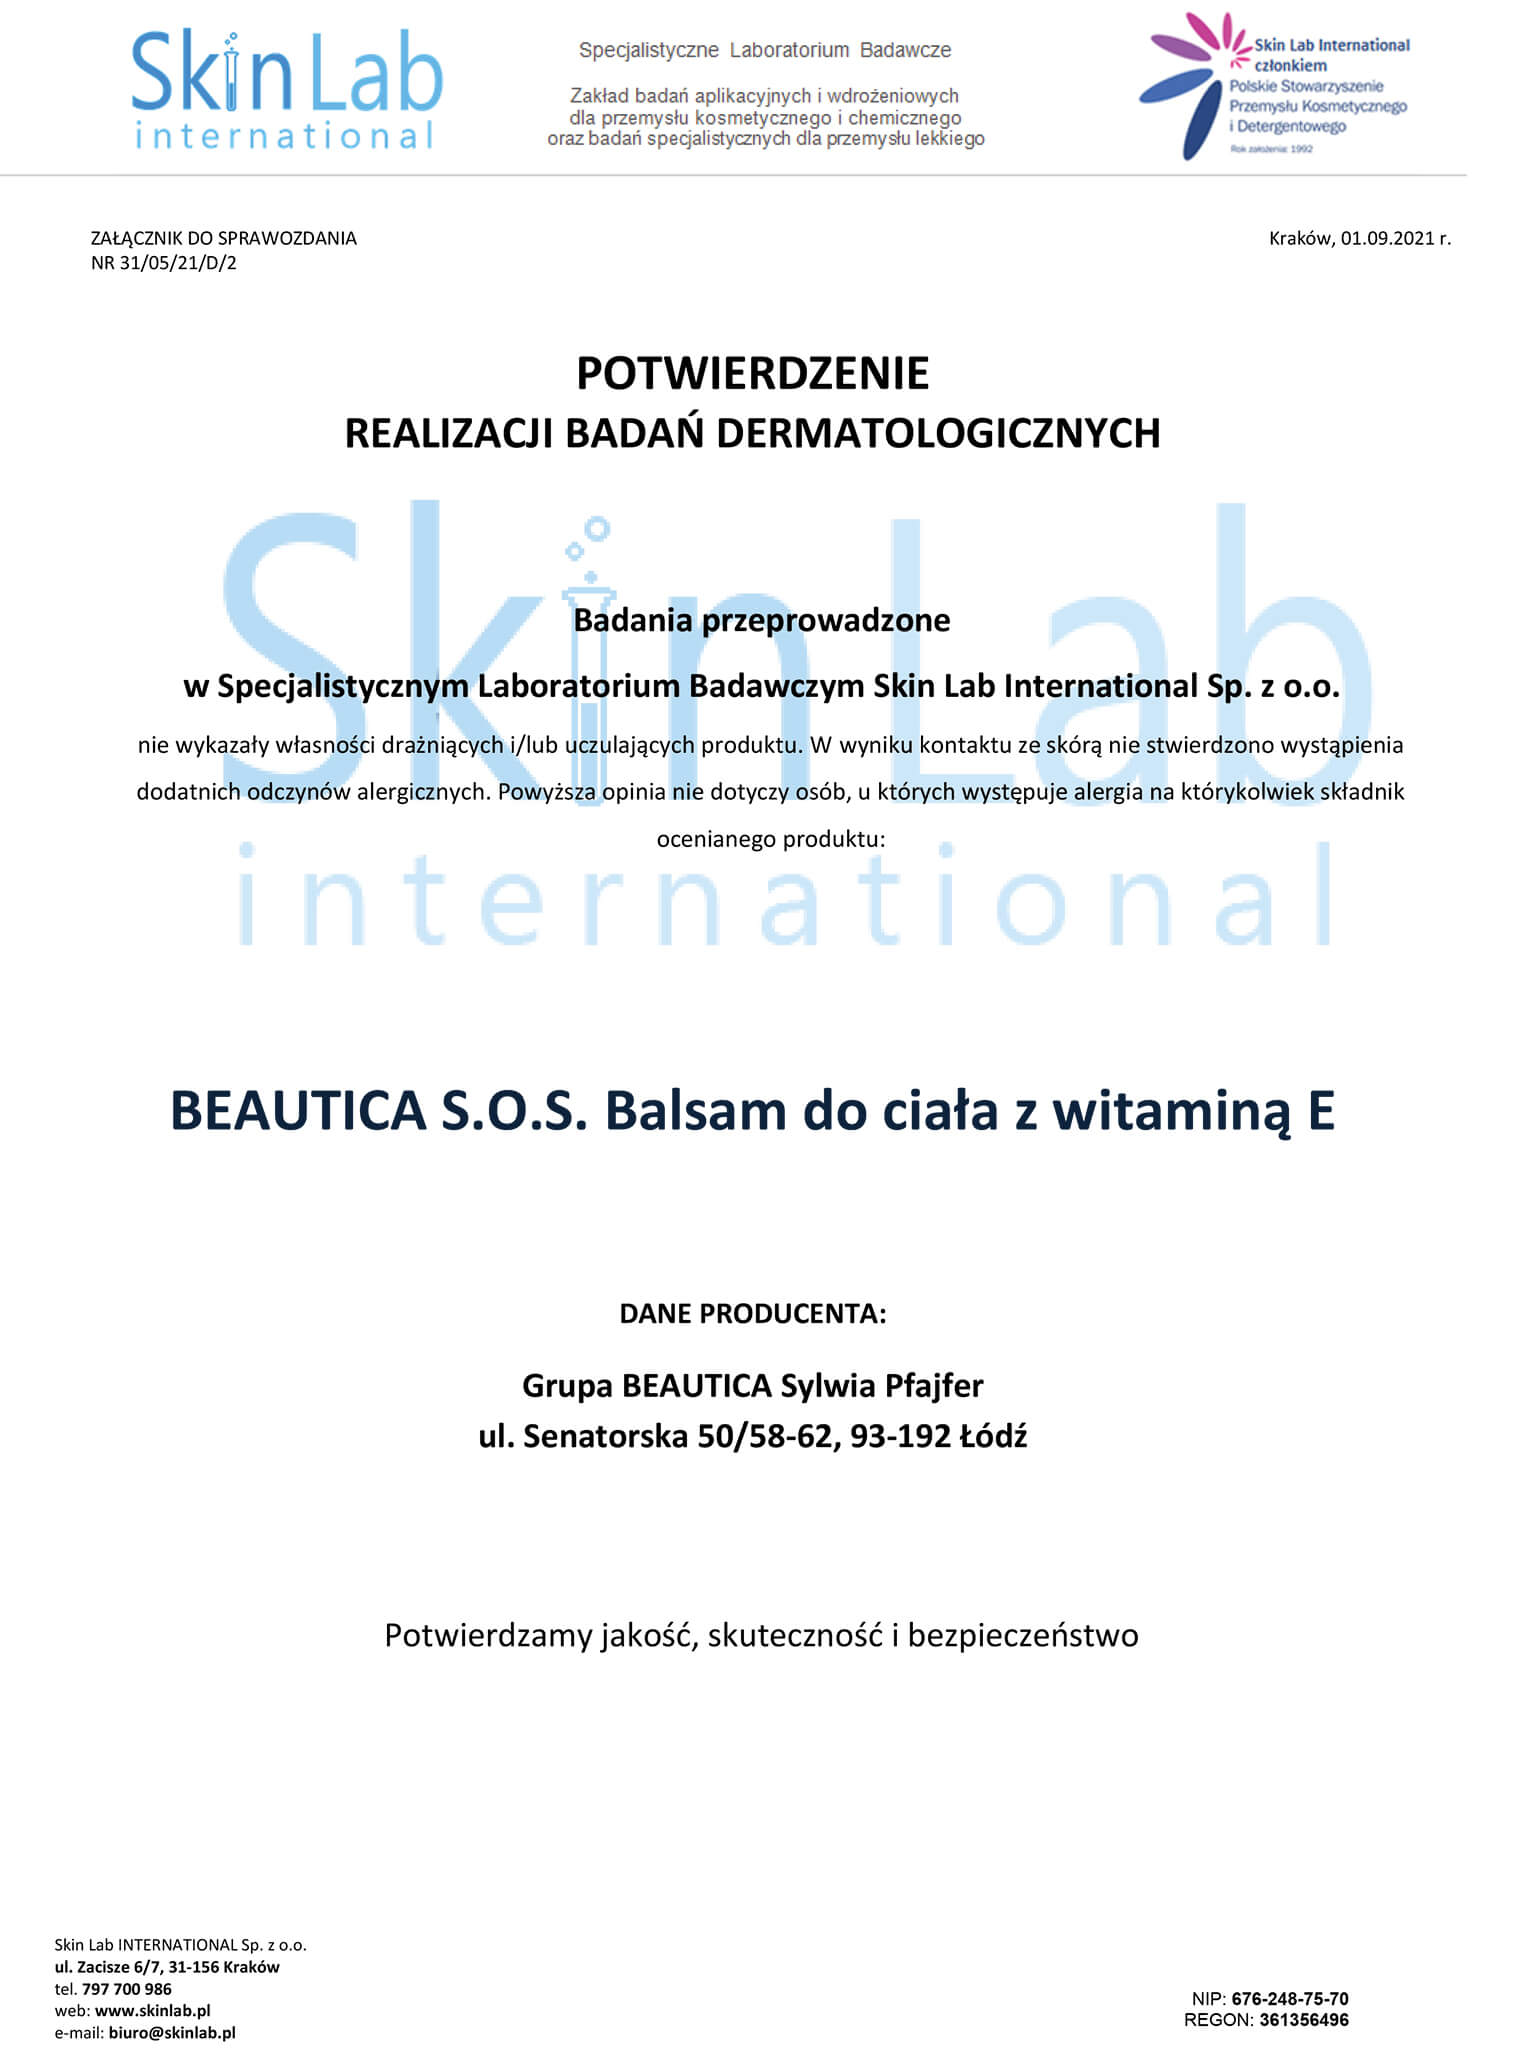 Beautica Balsam S.O.S Certyfikat Jakości